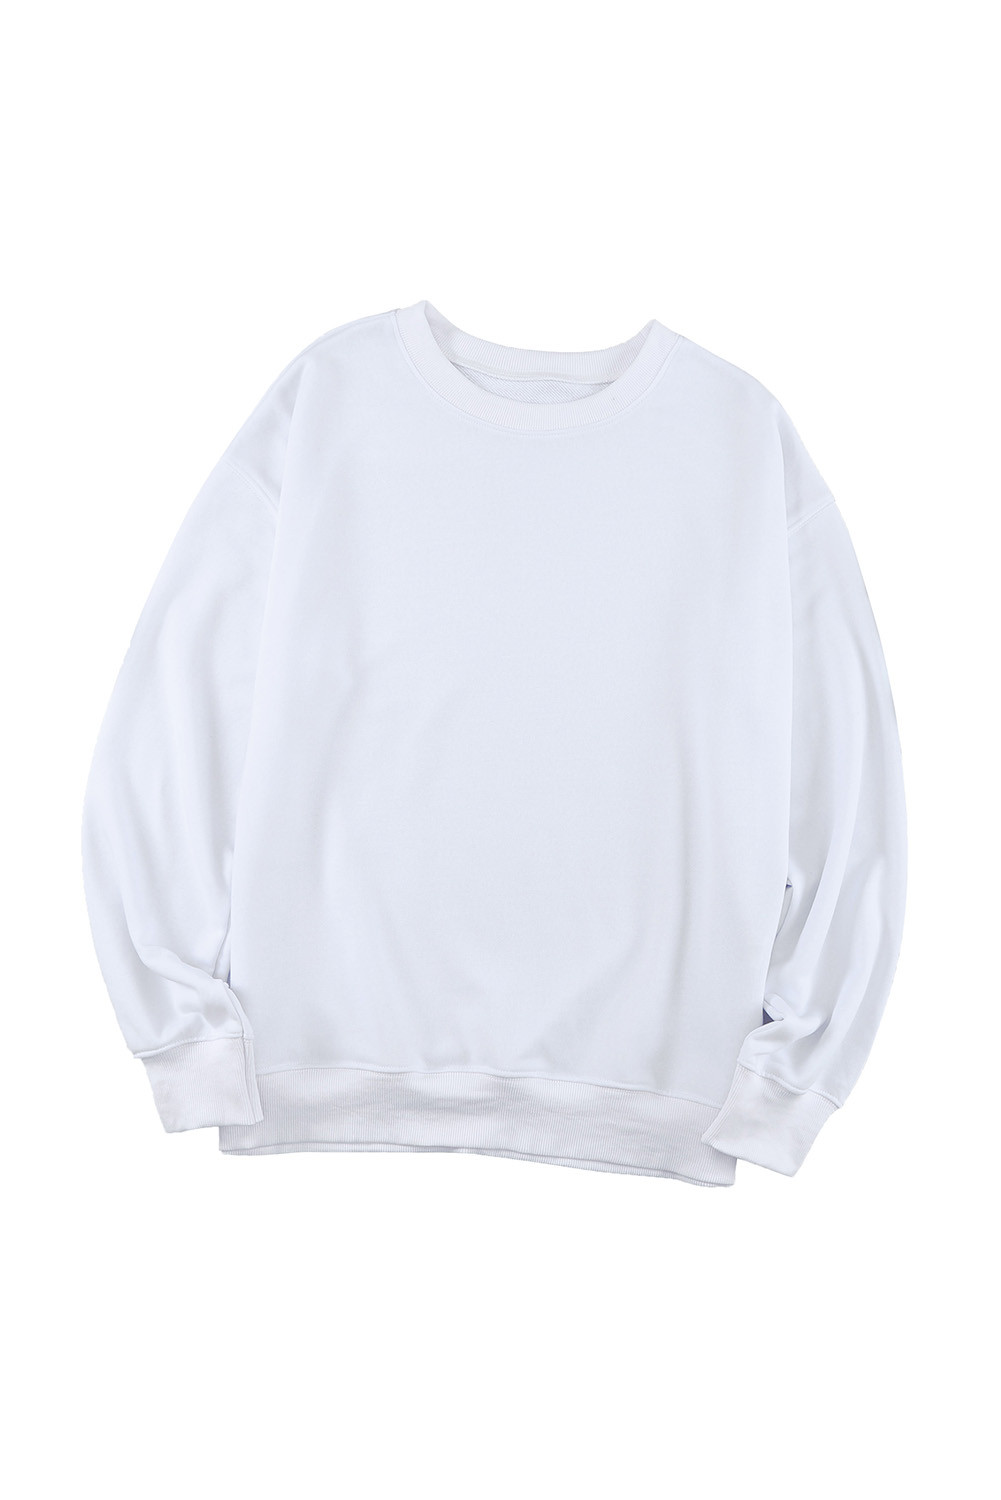 US$6.98 White Plain Crew Neck Pullover Sweatshirt Wholesale - www.dear ...